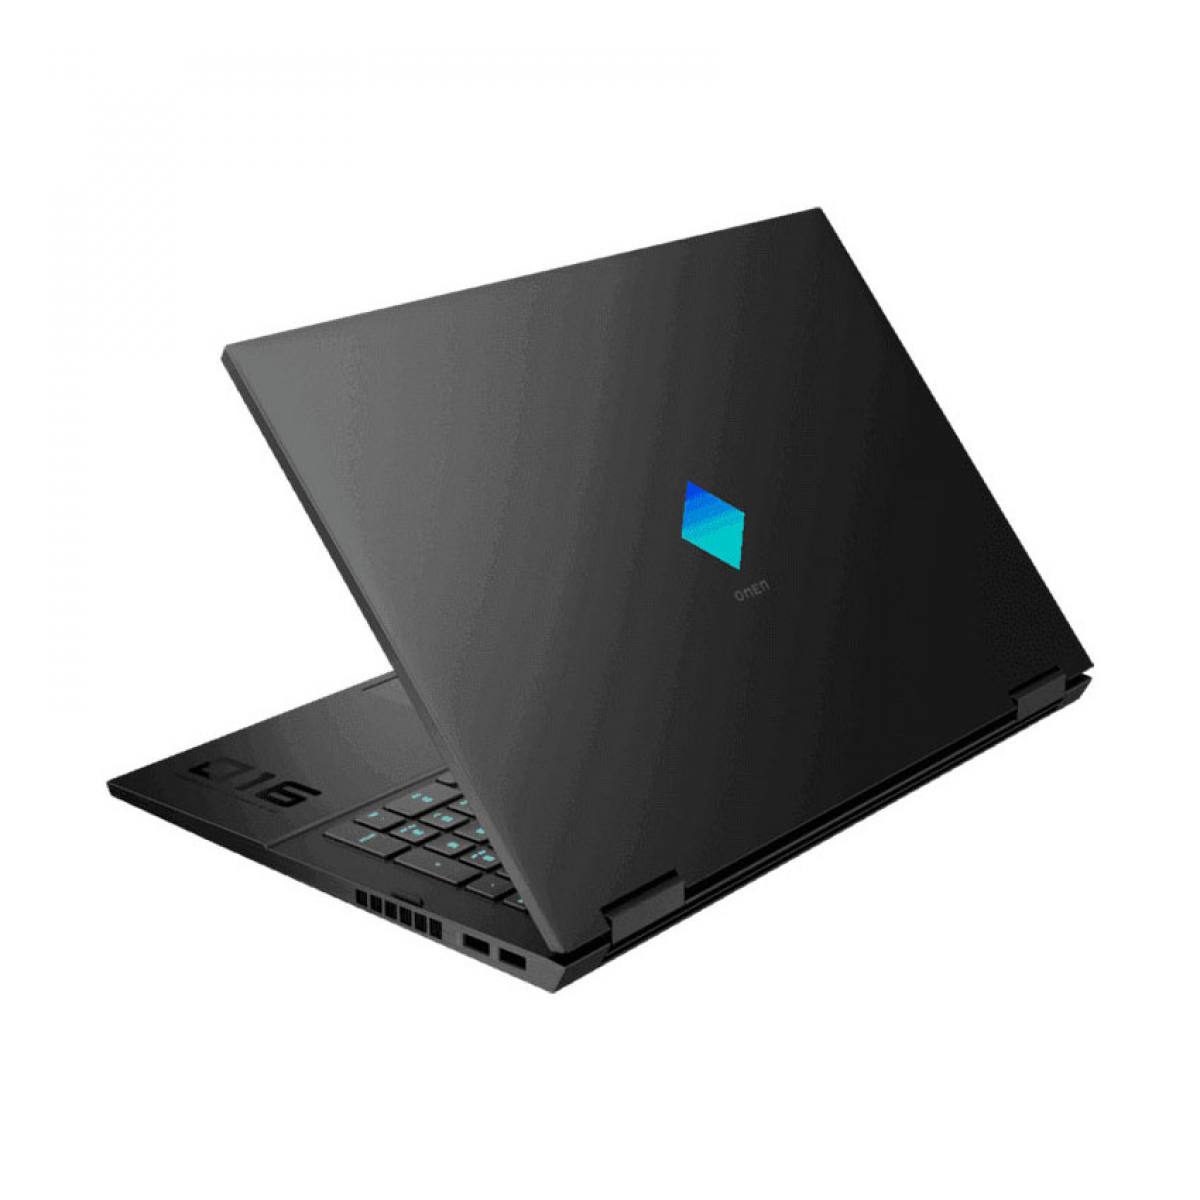 Laptop HP Gaming Omen 16-b0142TX (i5 11400H/16GB RAM/1TB SSD)